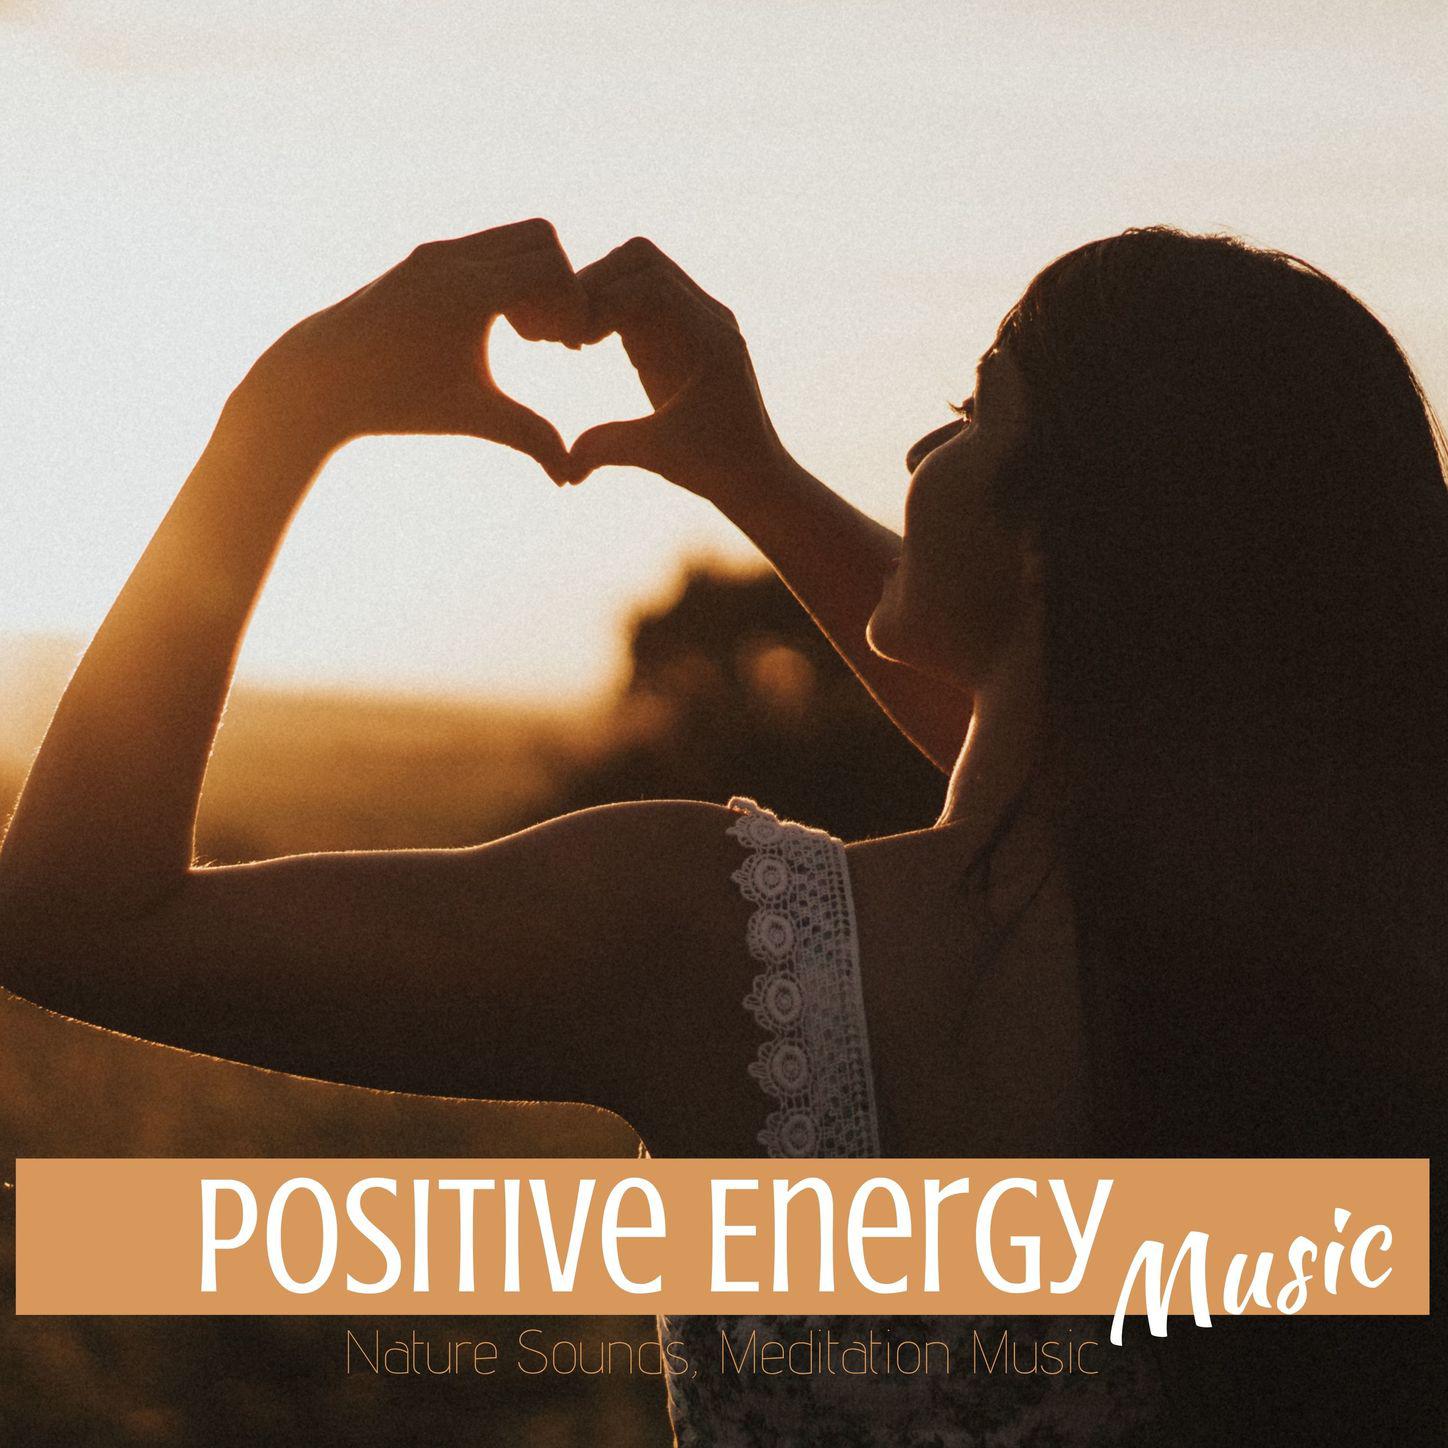 Positive Energy Music - Nature Sounds, Meditation Music